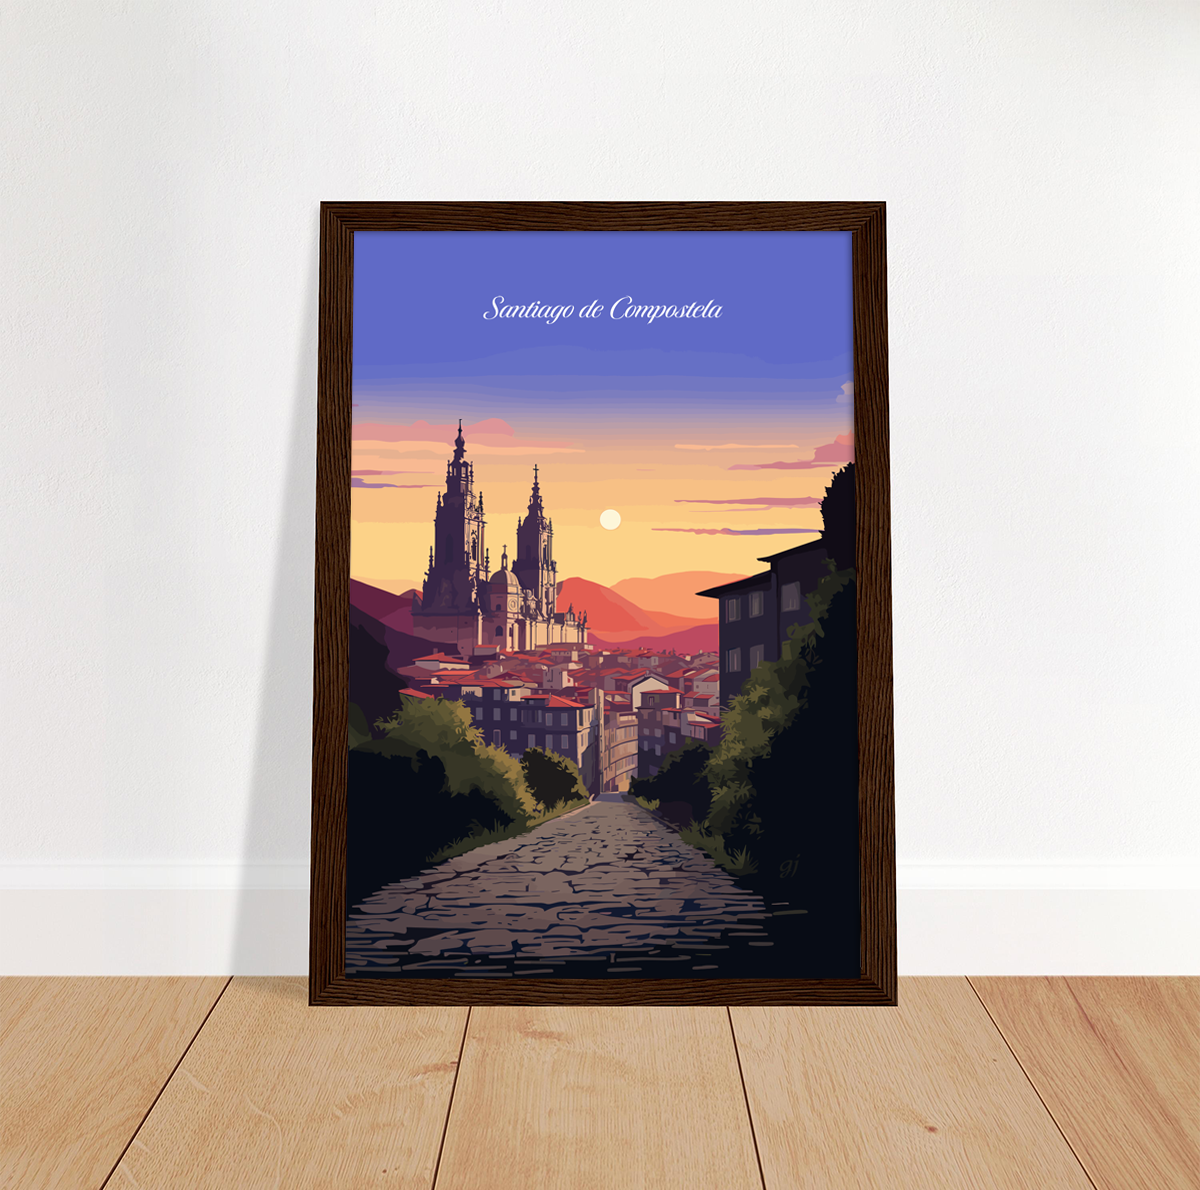 Santiago de Compostela poster by bon voyage design